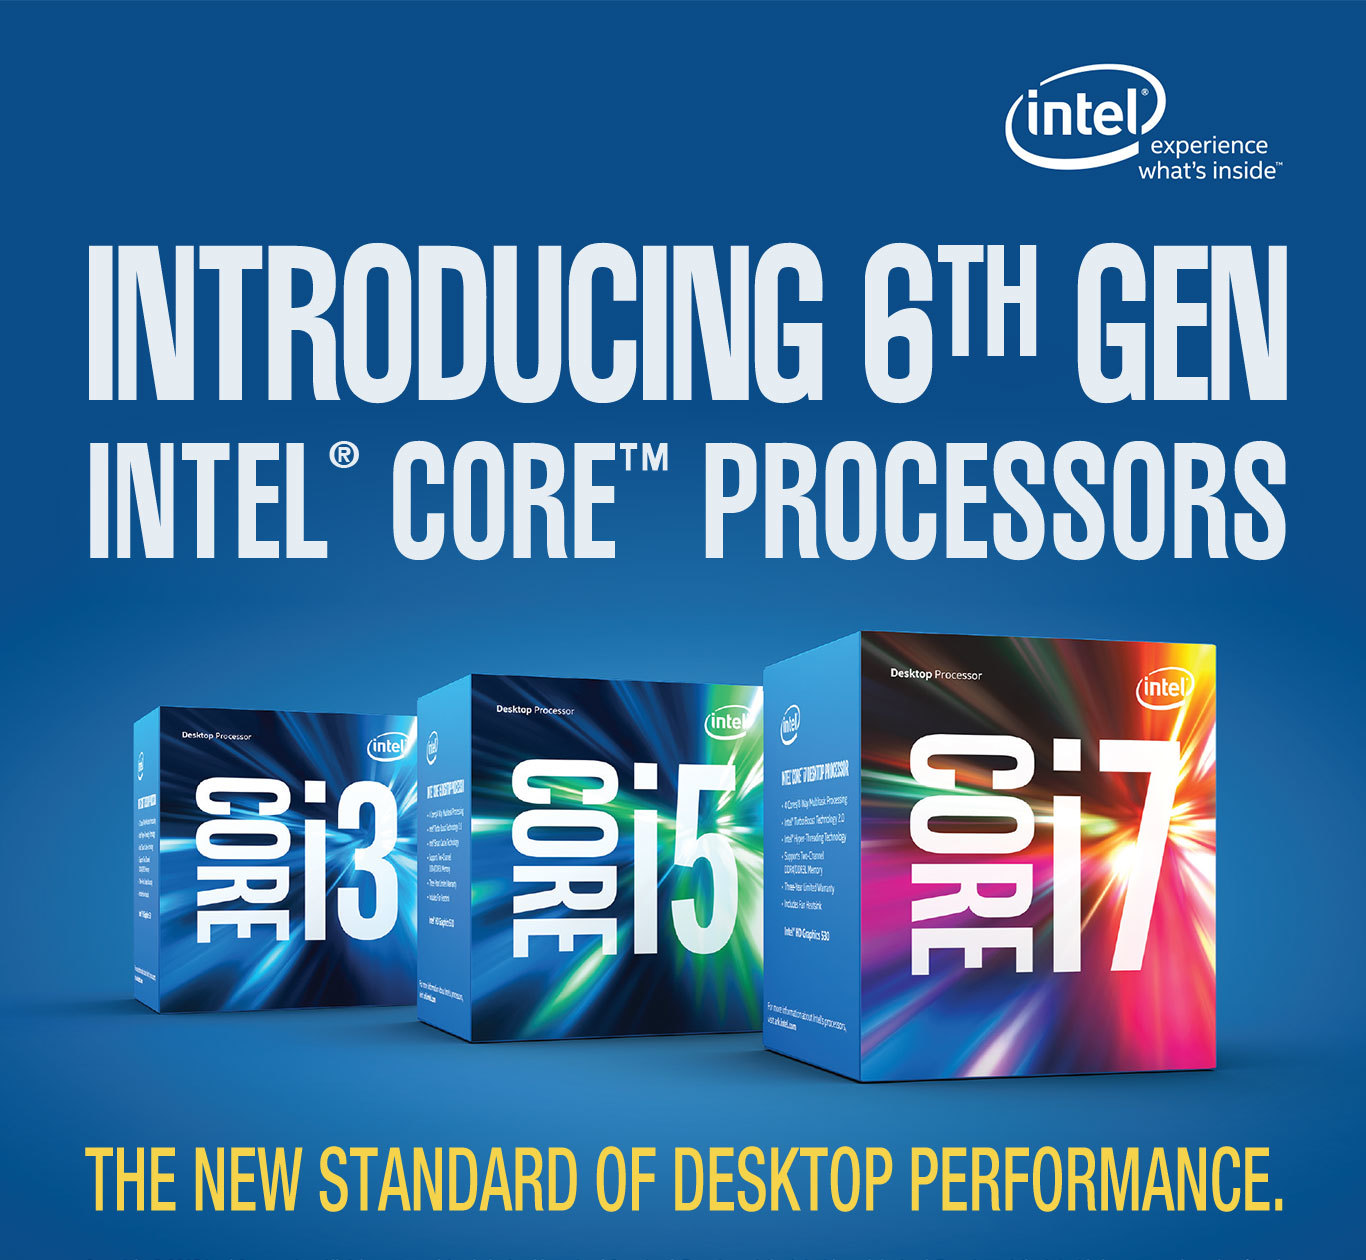 Introducing 6th Gen Intel Core Processors